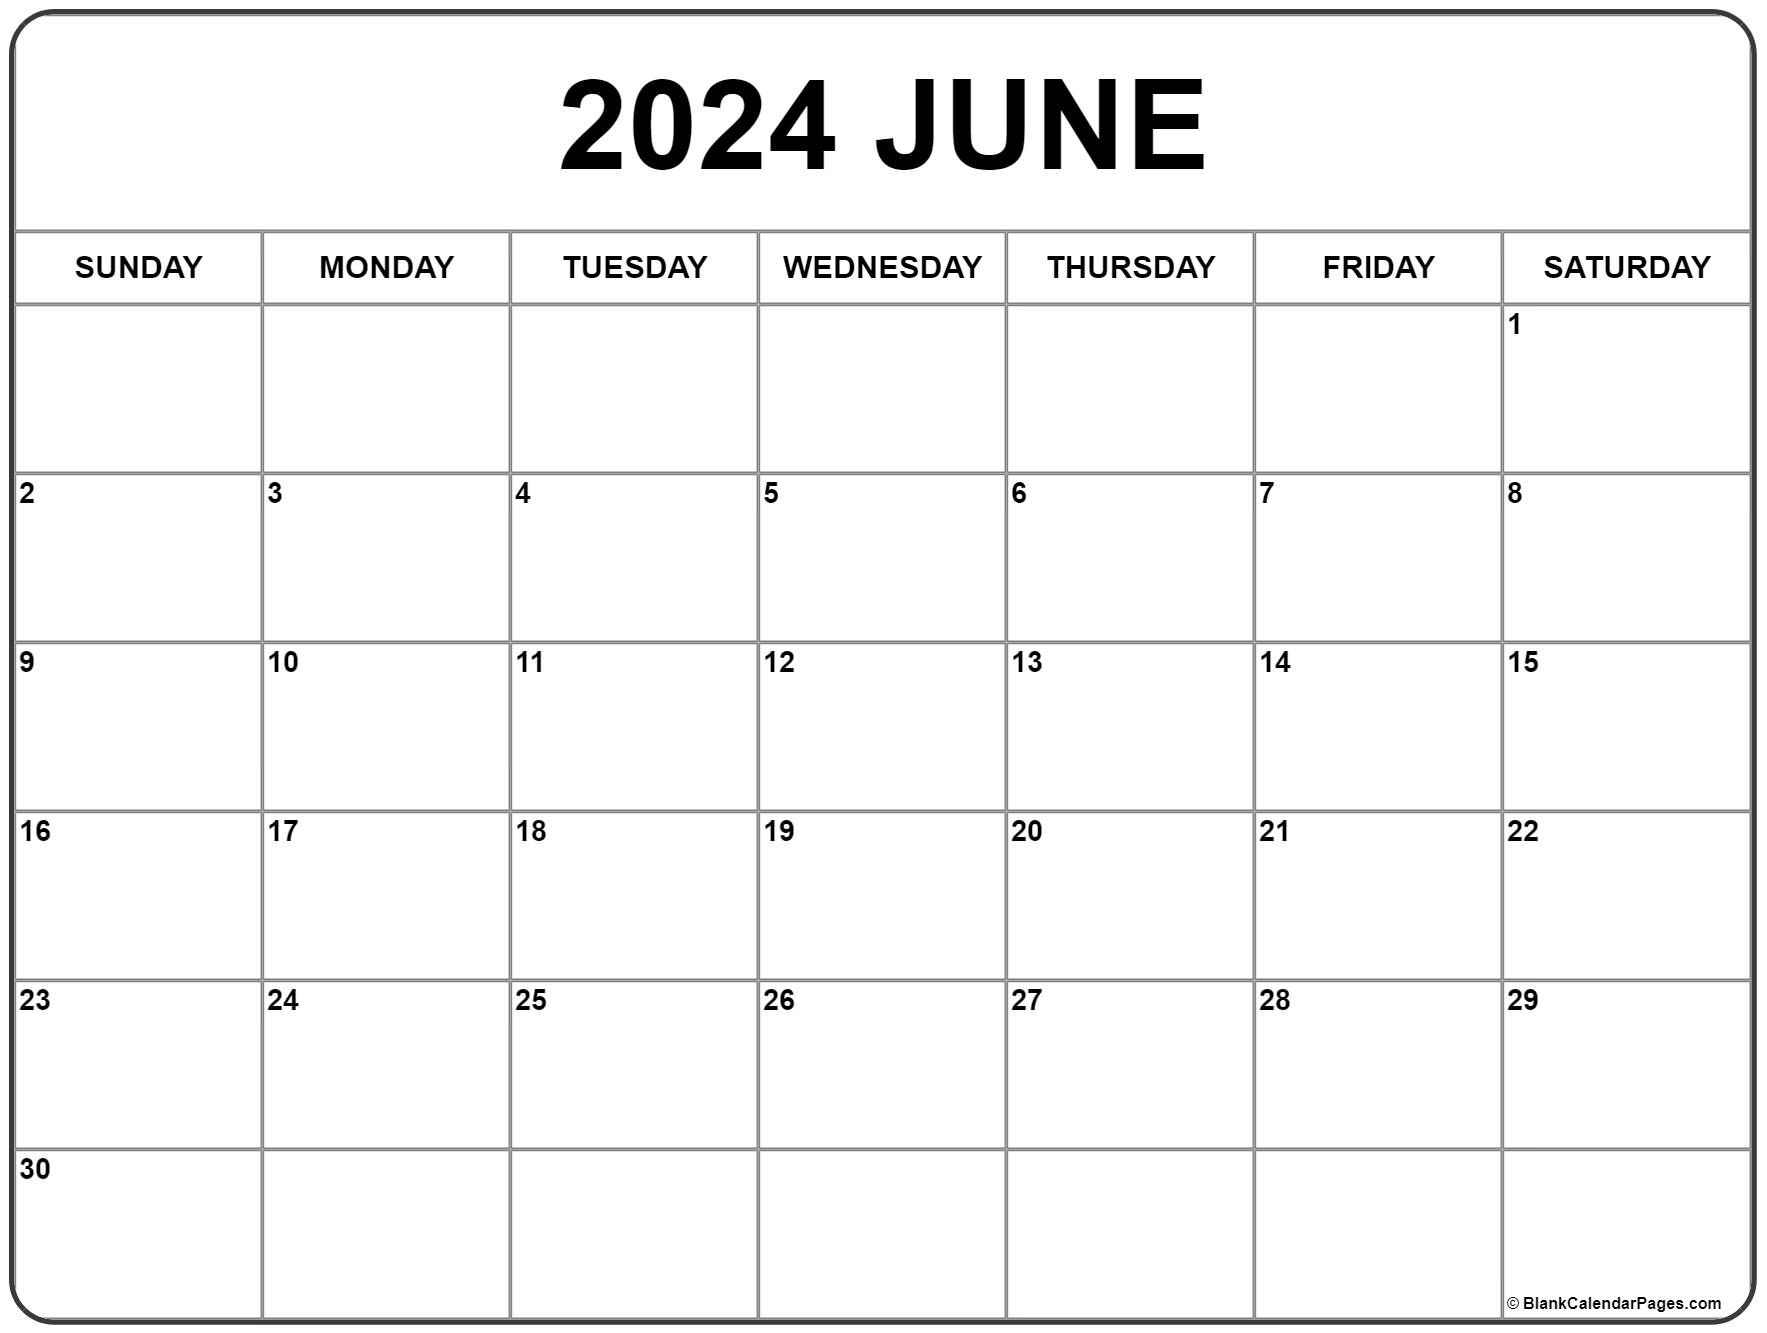 June 2024 Calendar | Free Printable Calendar intended for June 2024 Calendar Page